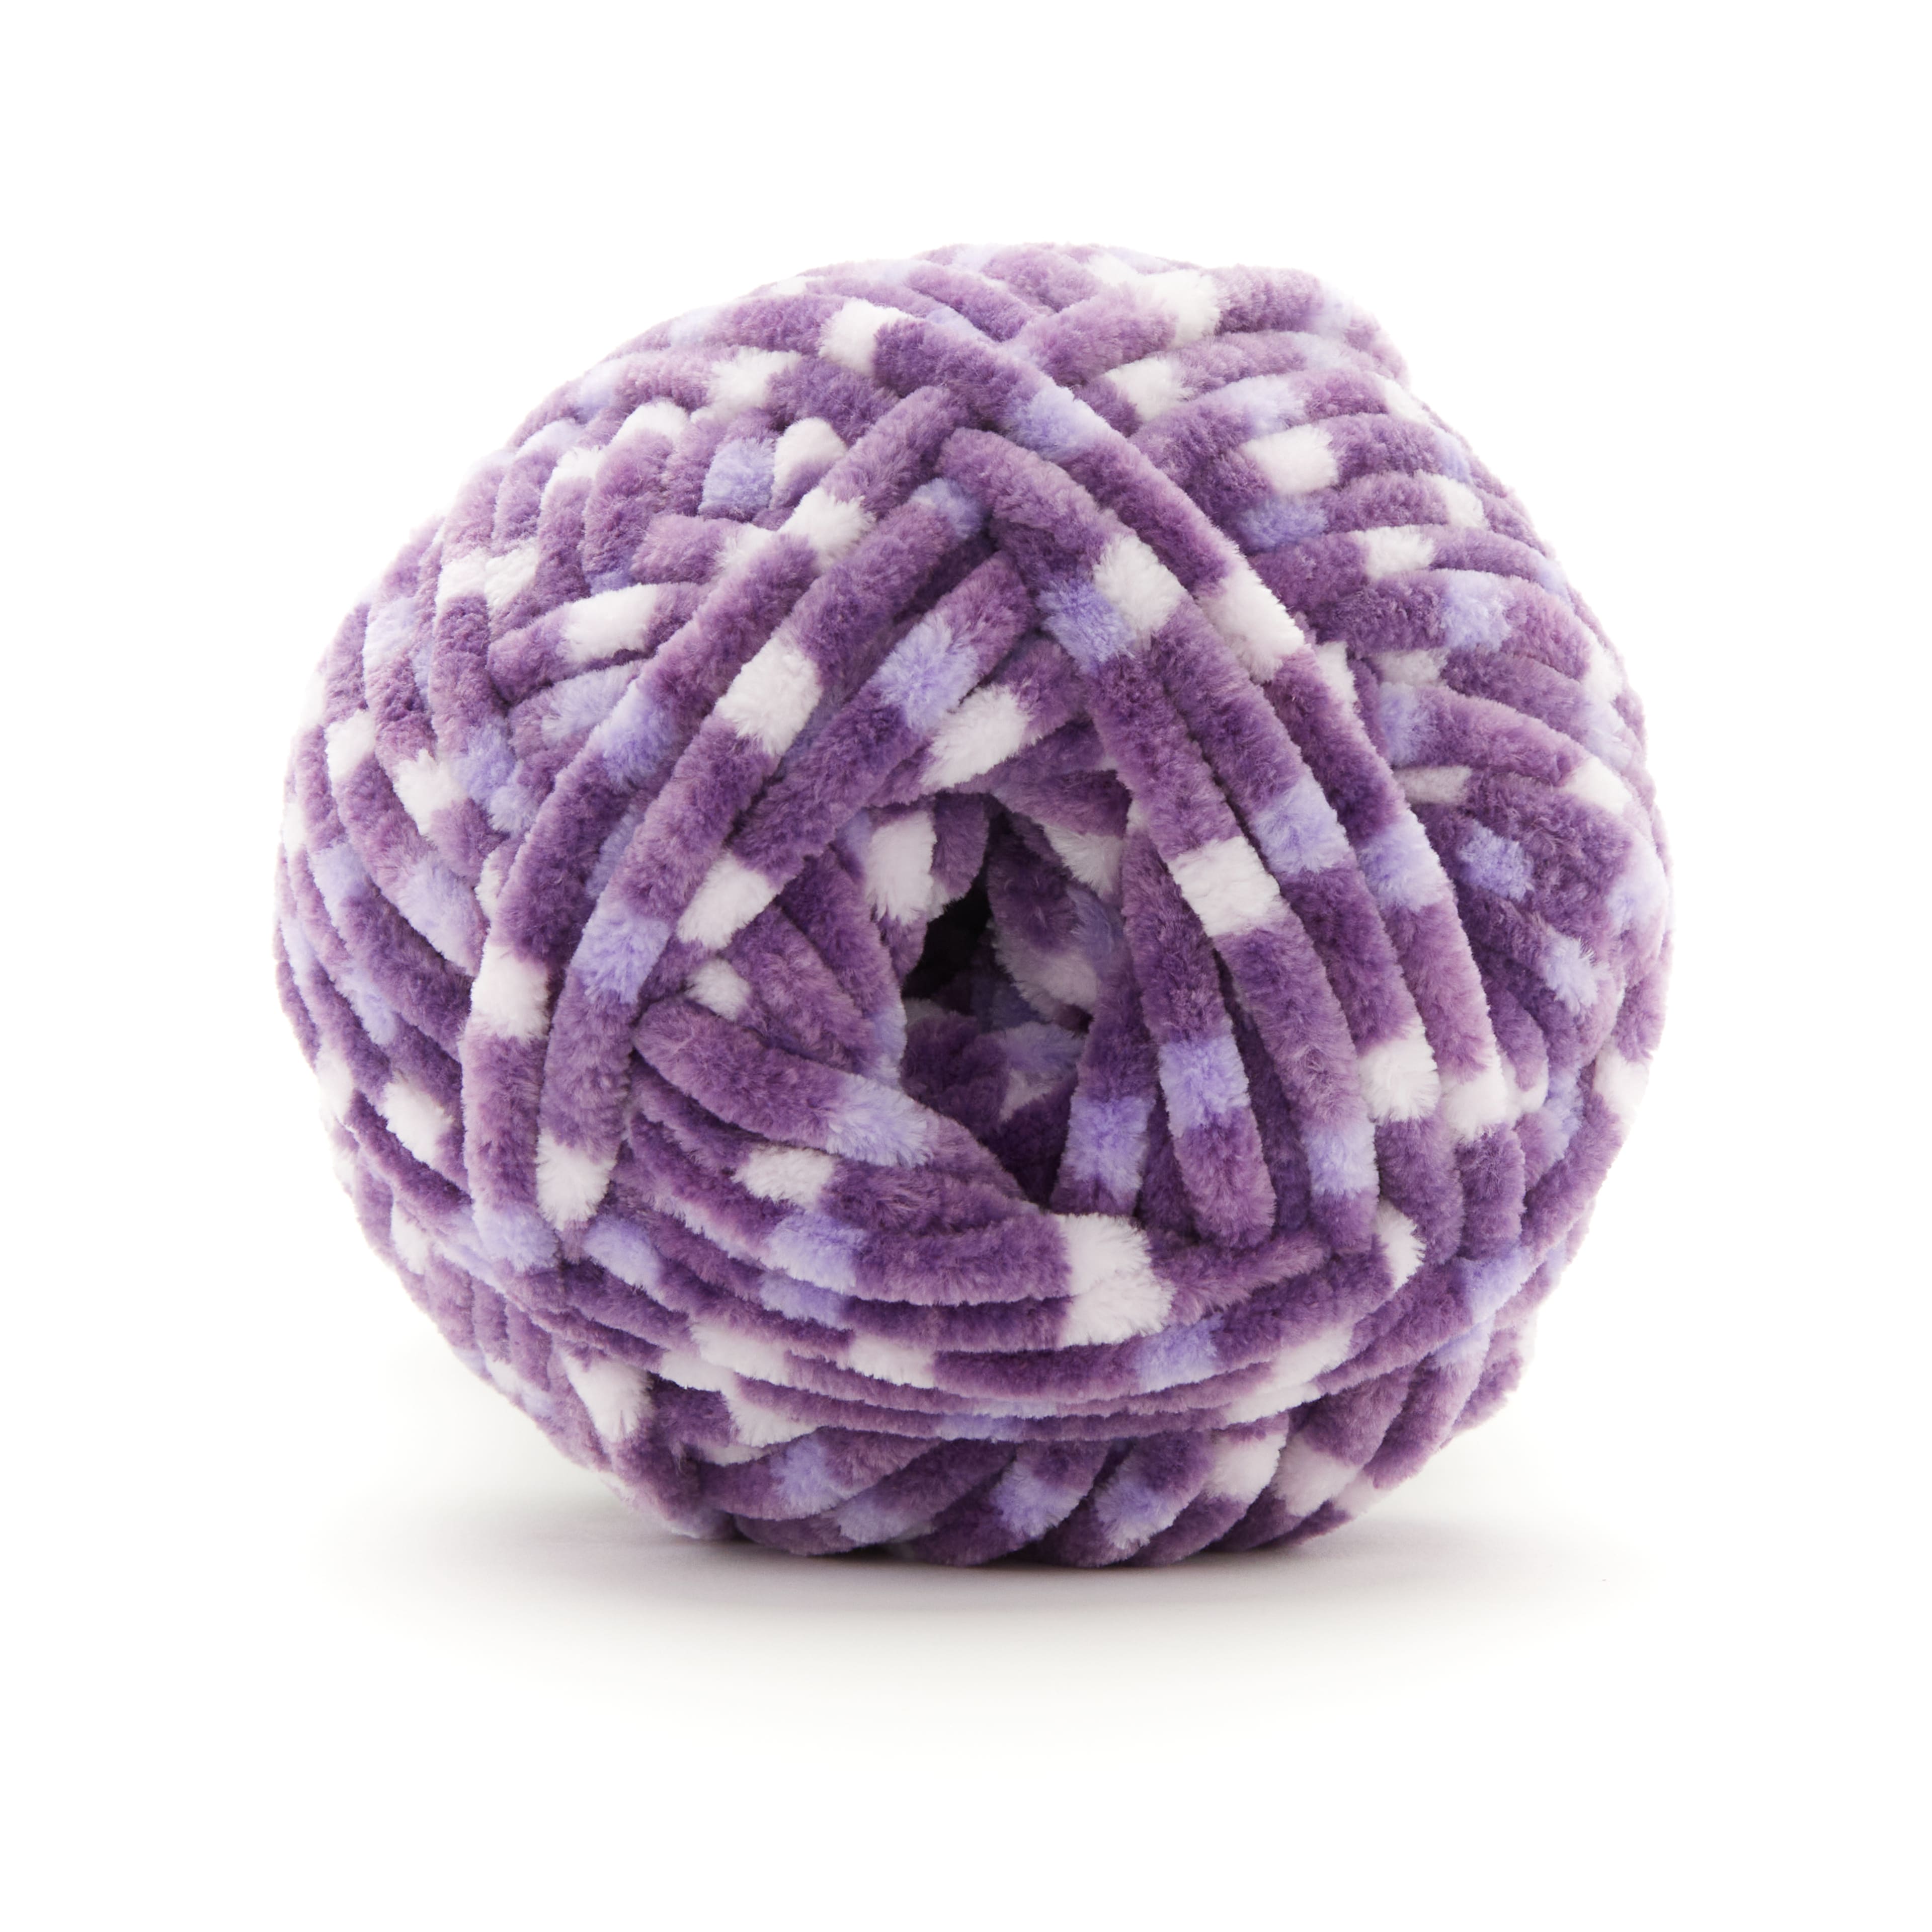 Loops & Threads Sweet Snuggles Lite Yarn - Dot Grapes - 9 oz